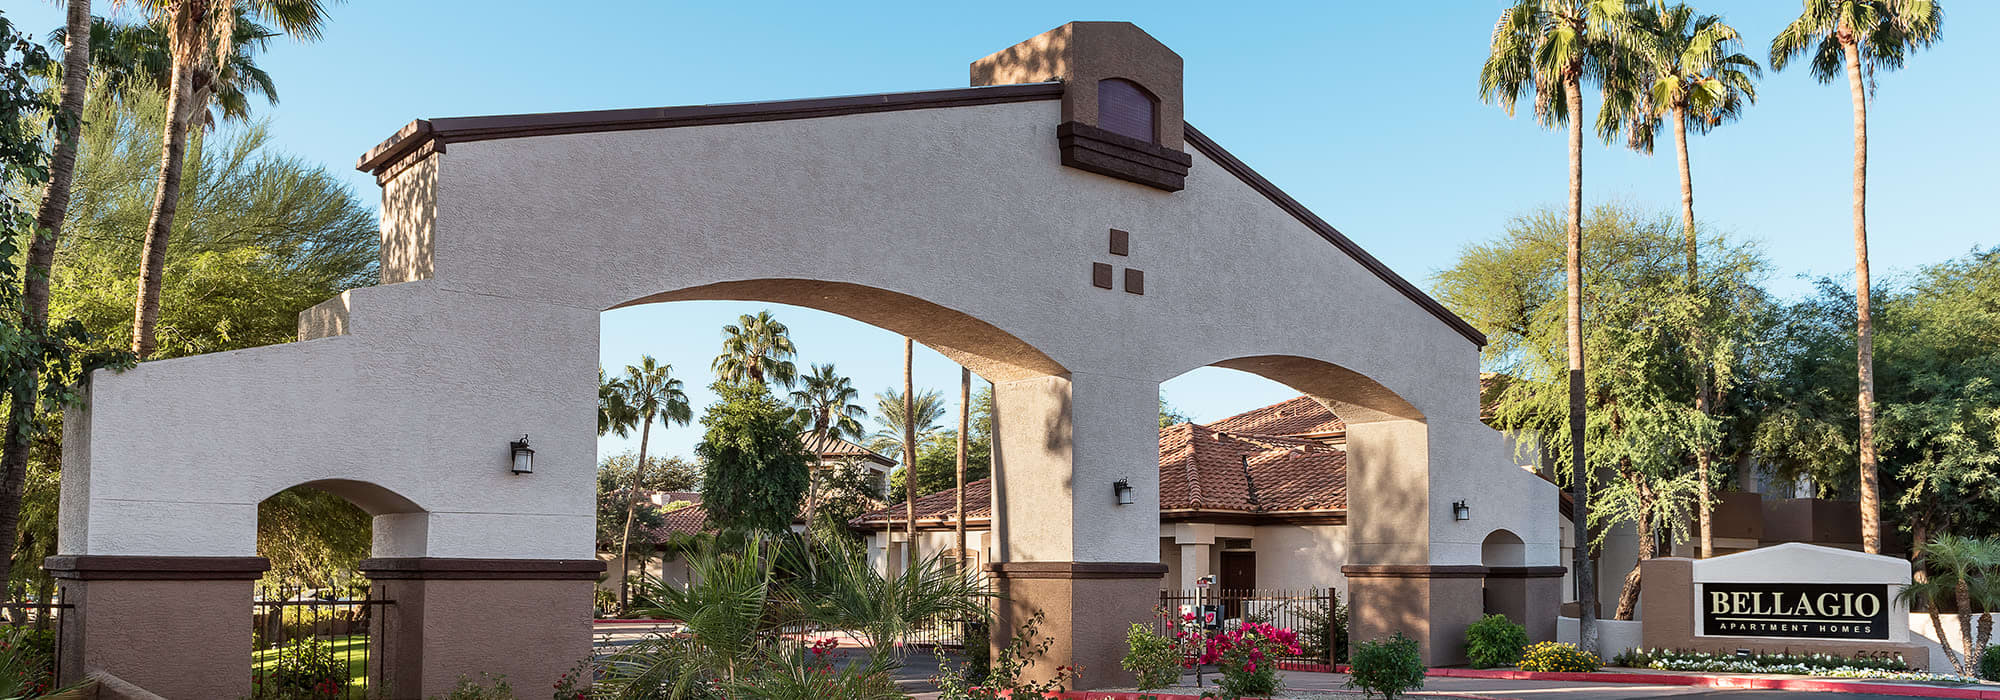 Entrance to the Bellagio in Scottsdale, Arizona